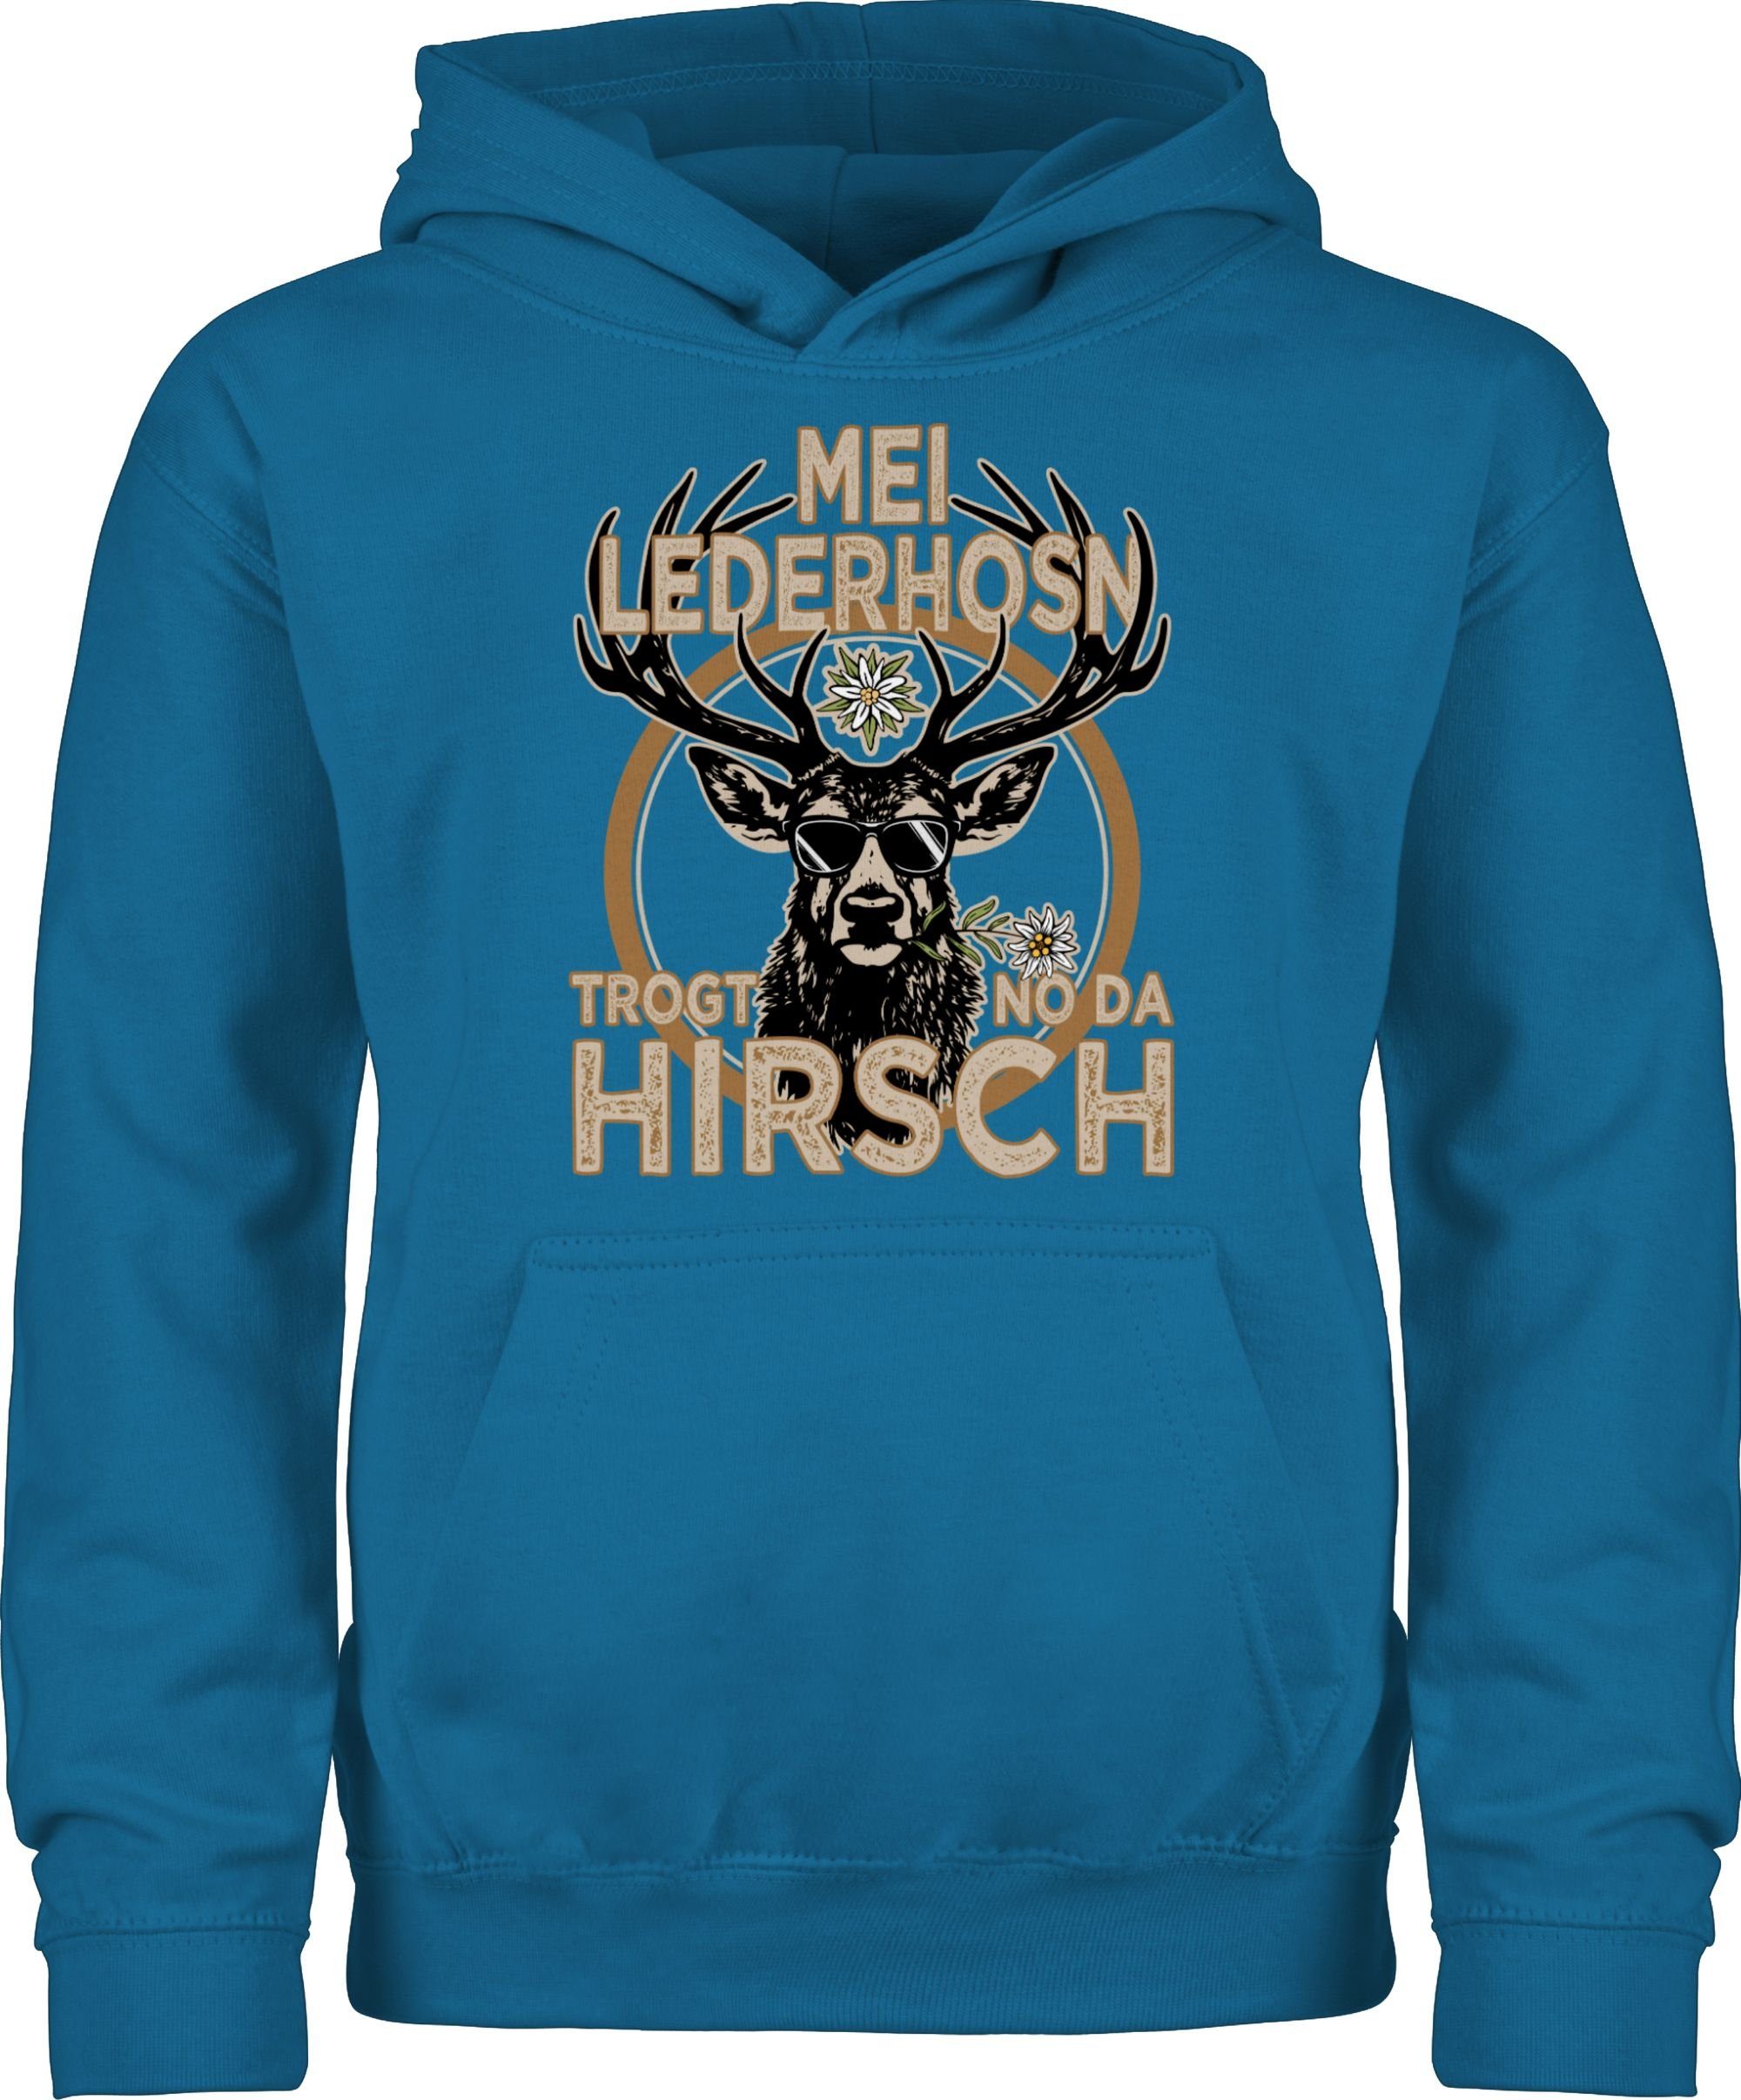 Shirtracer Hoodie Trachten Outfit Lederhose Spruch Trägt der Hirsch Mode für Oktoberfest Kinder Outfit 1 Himmelblau